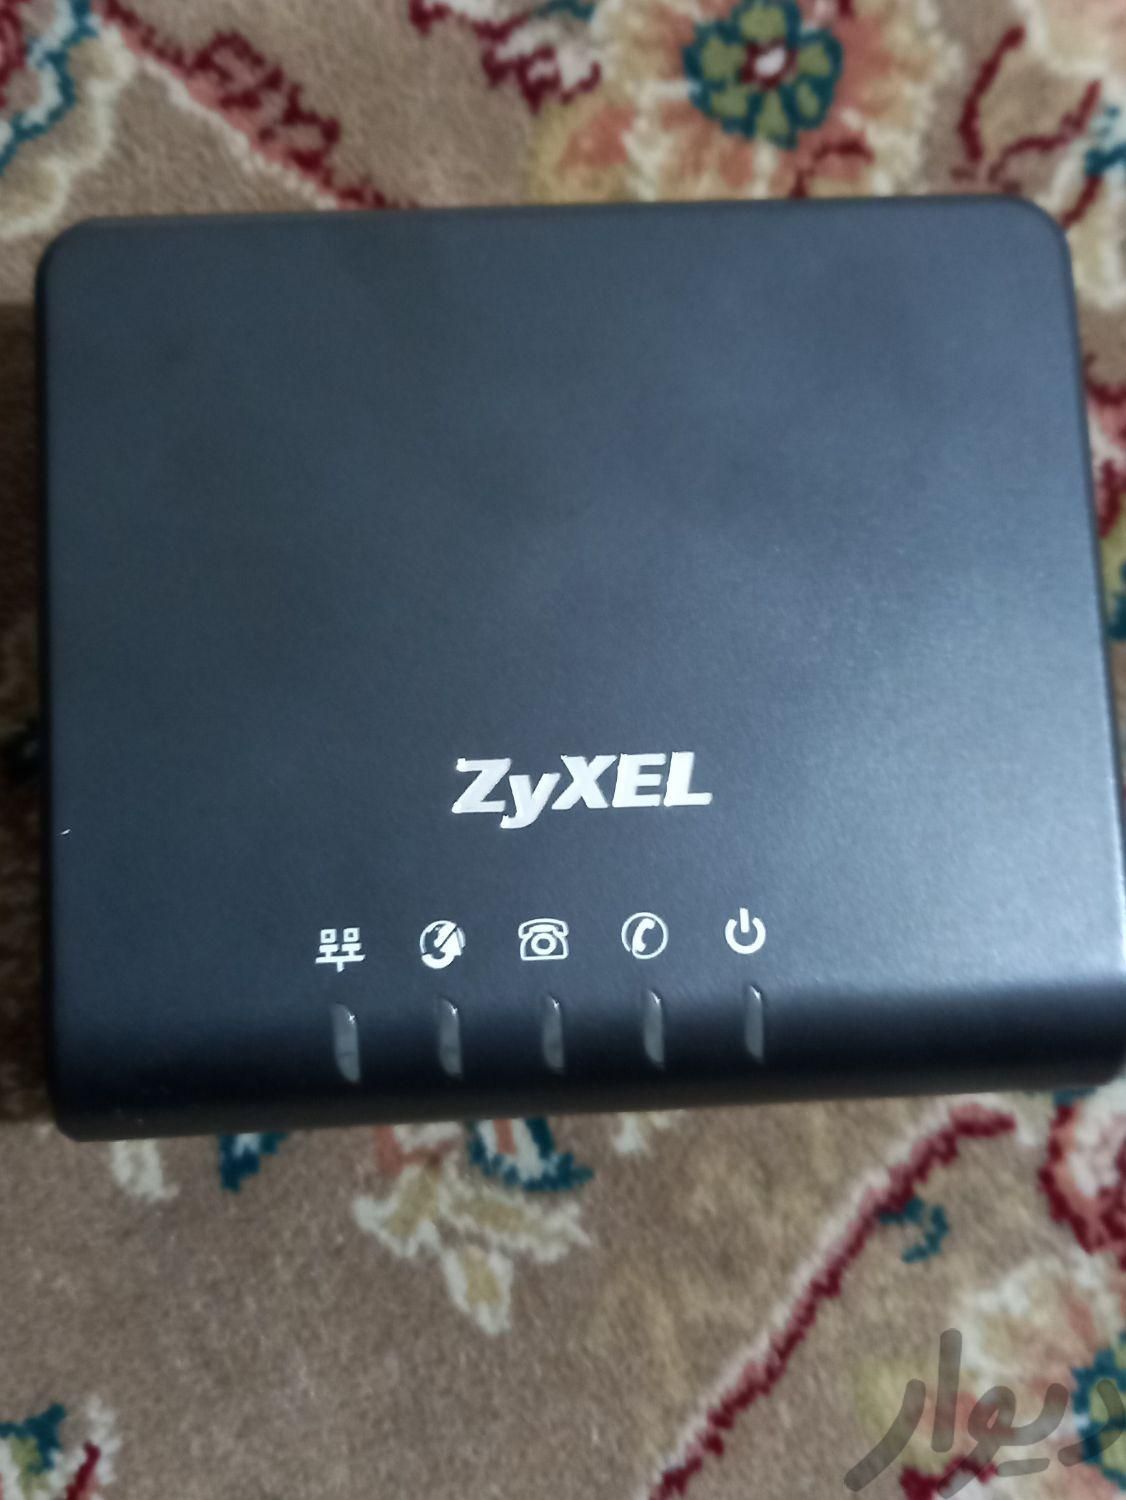 مودم ZyXEL|مودم و تجهیزات شبکه رایانه|تهران, شارق شرقی|دیوار